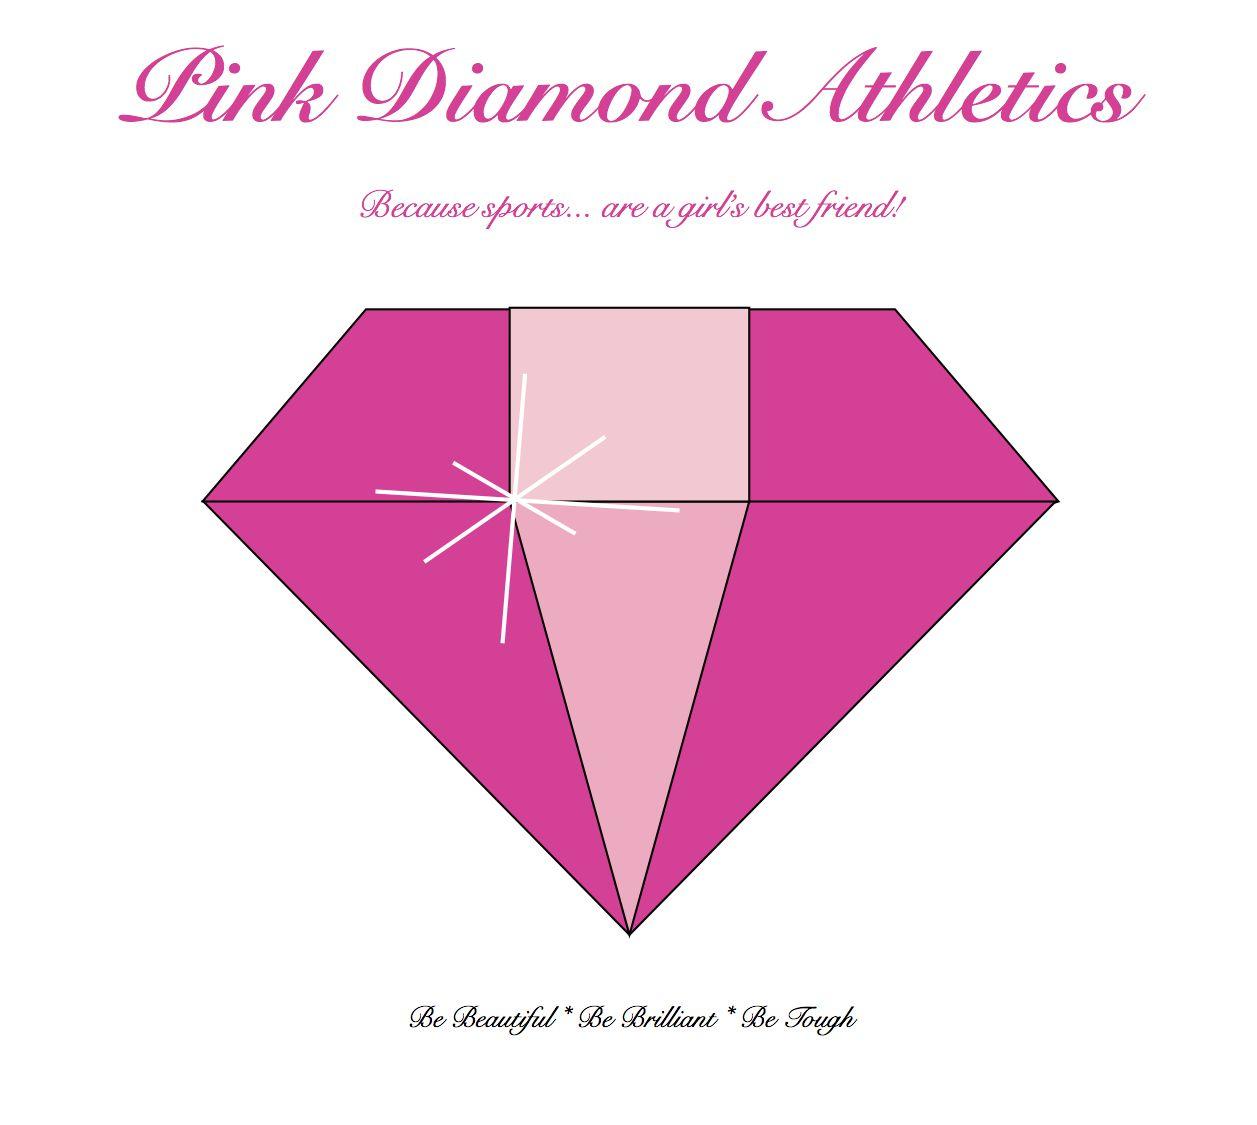 Pink Diamond Logo - Pink Diamond Athletics: May 2013